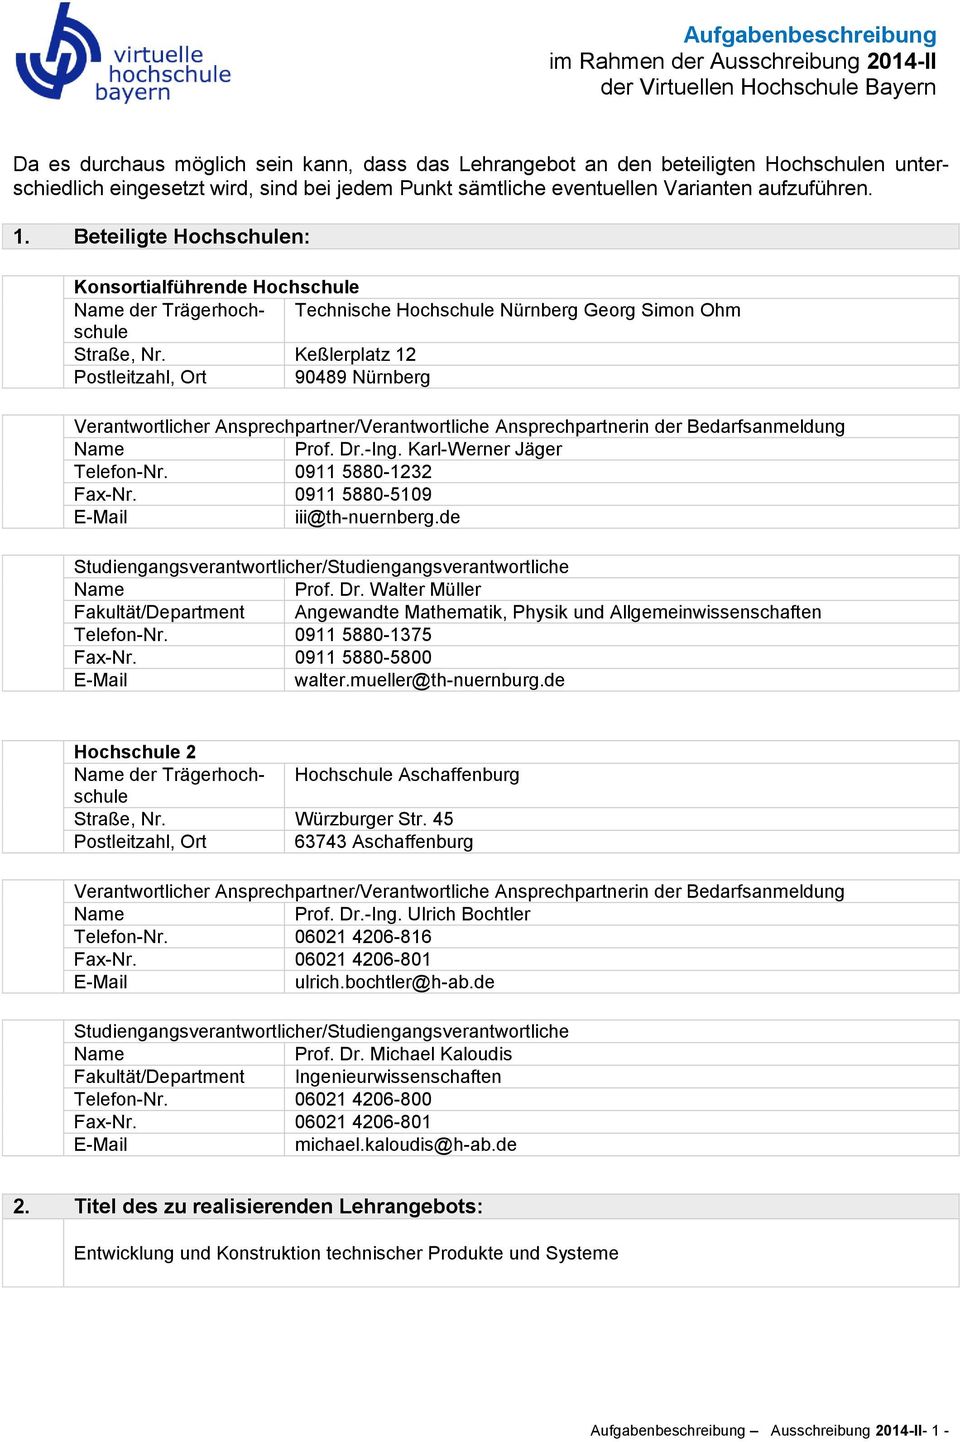 Beteiligte Hochschulen: Konsortialführende Hochschule der Trägerhochschule Technische Hochschule Nürnberg Georg Simon Ohm Straße, Nr.